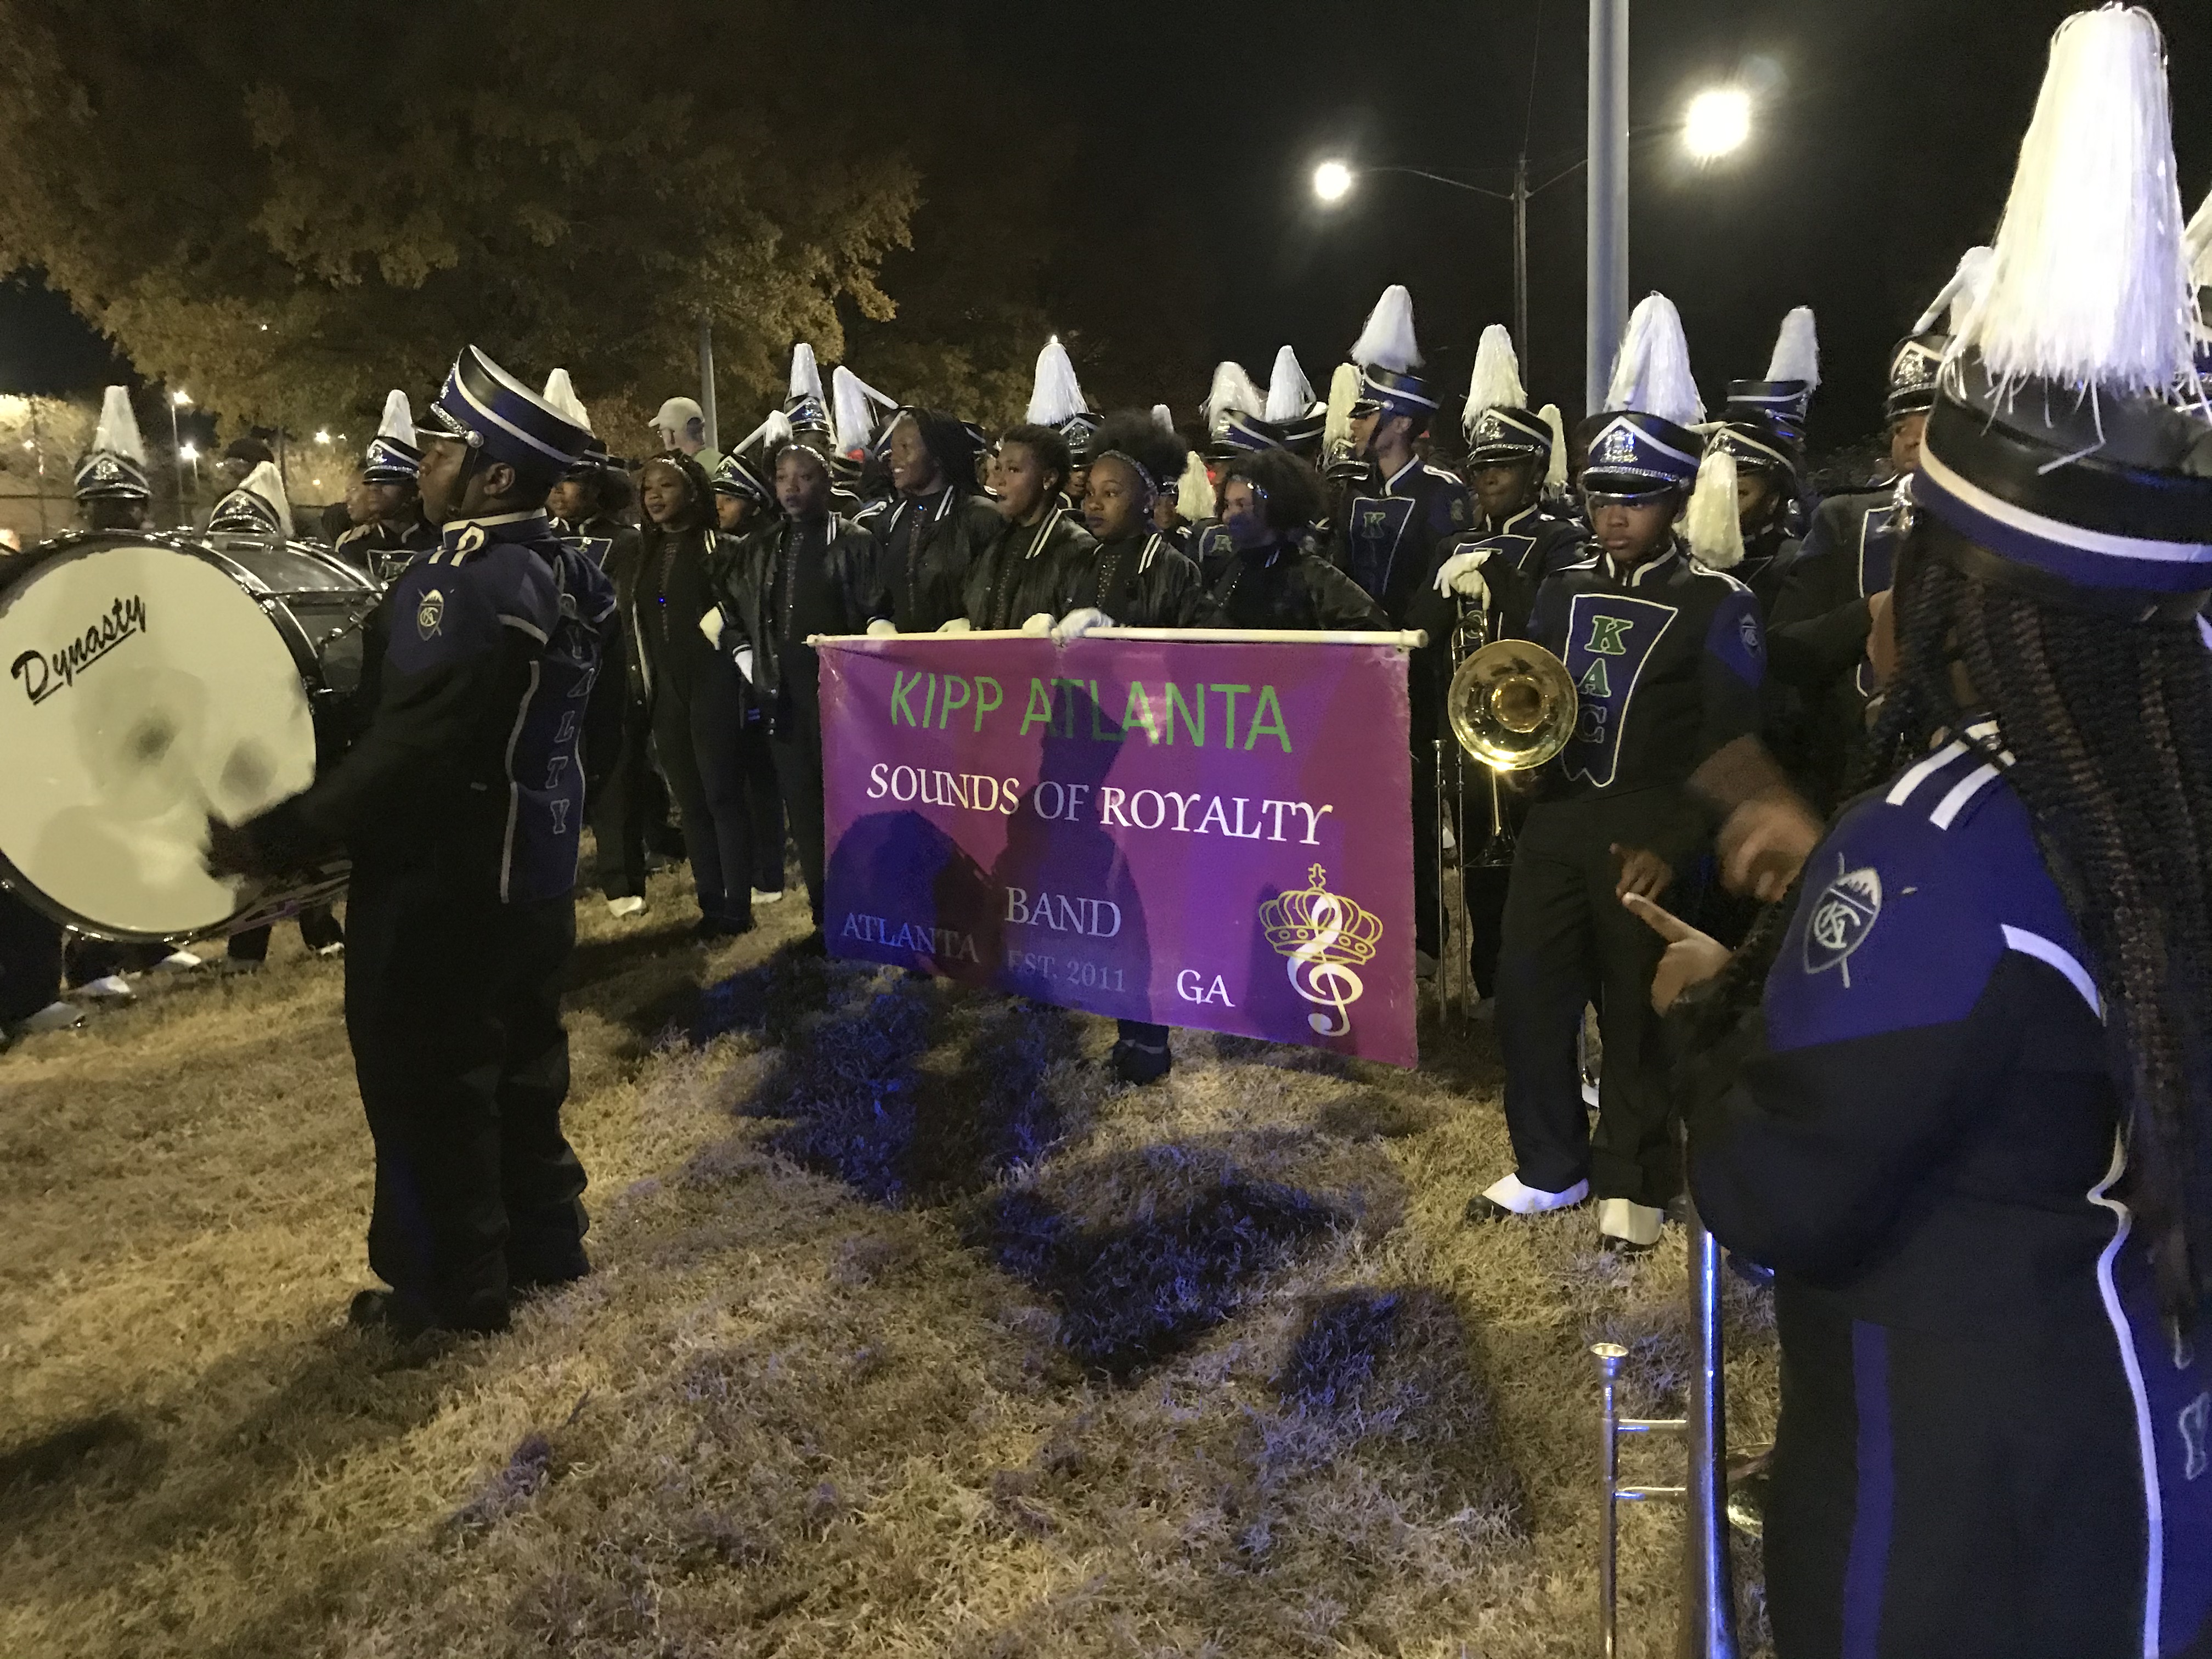 KIPP Atlanta Marching Band at the Democratic Debate in Nov 2019